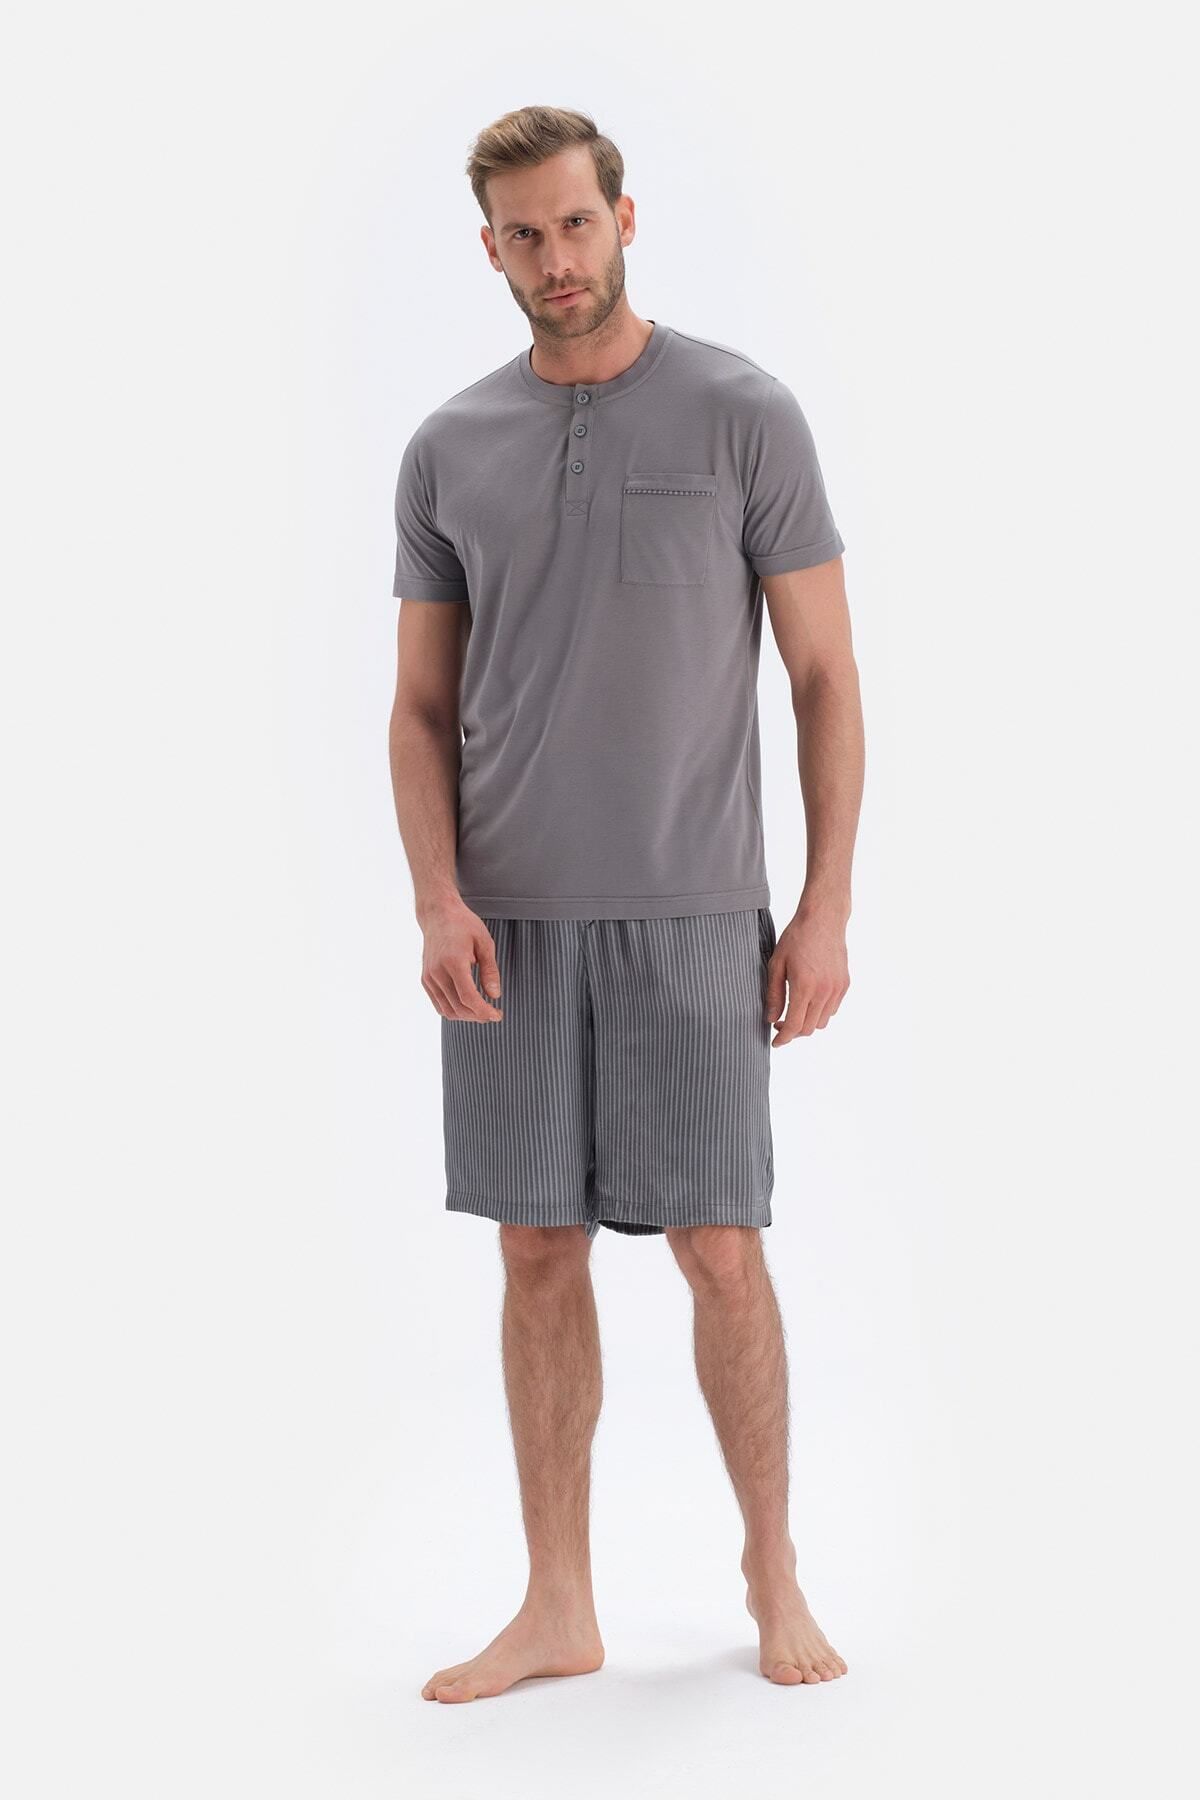 Dagi Gri T-shirt Pantolon Şort Üçlü Set Damat Pijama Takımı